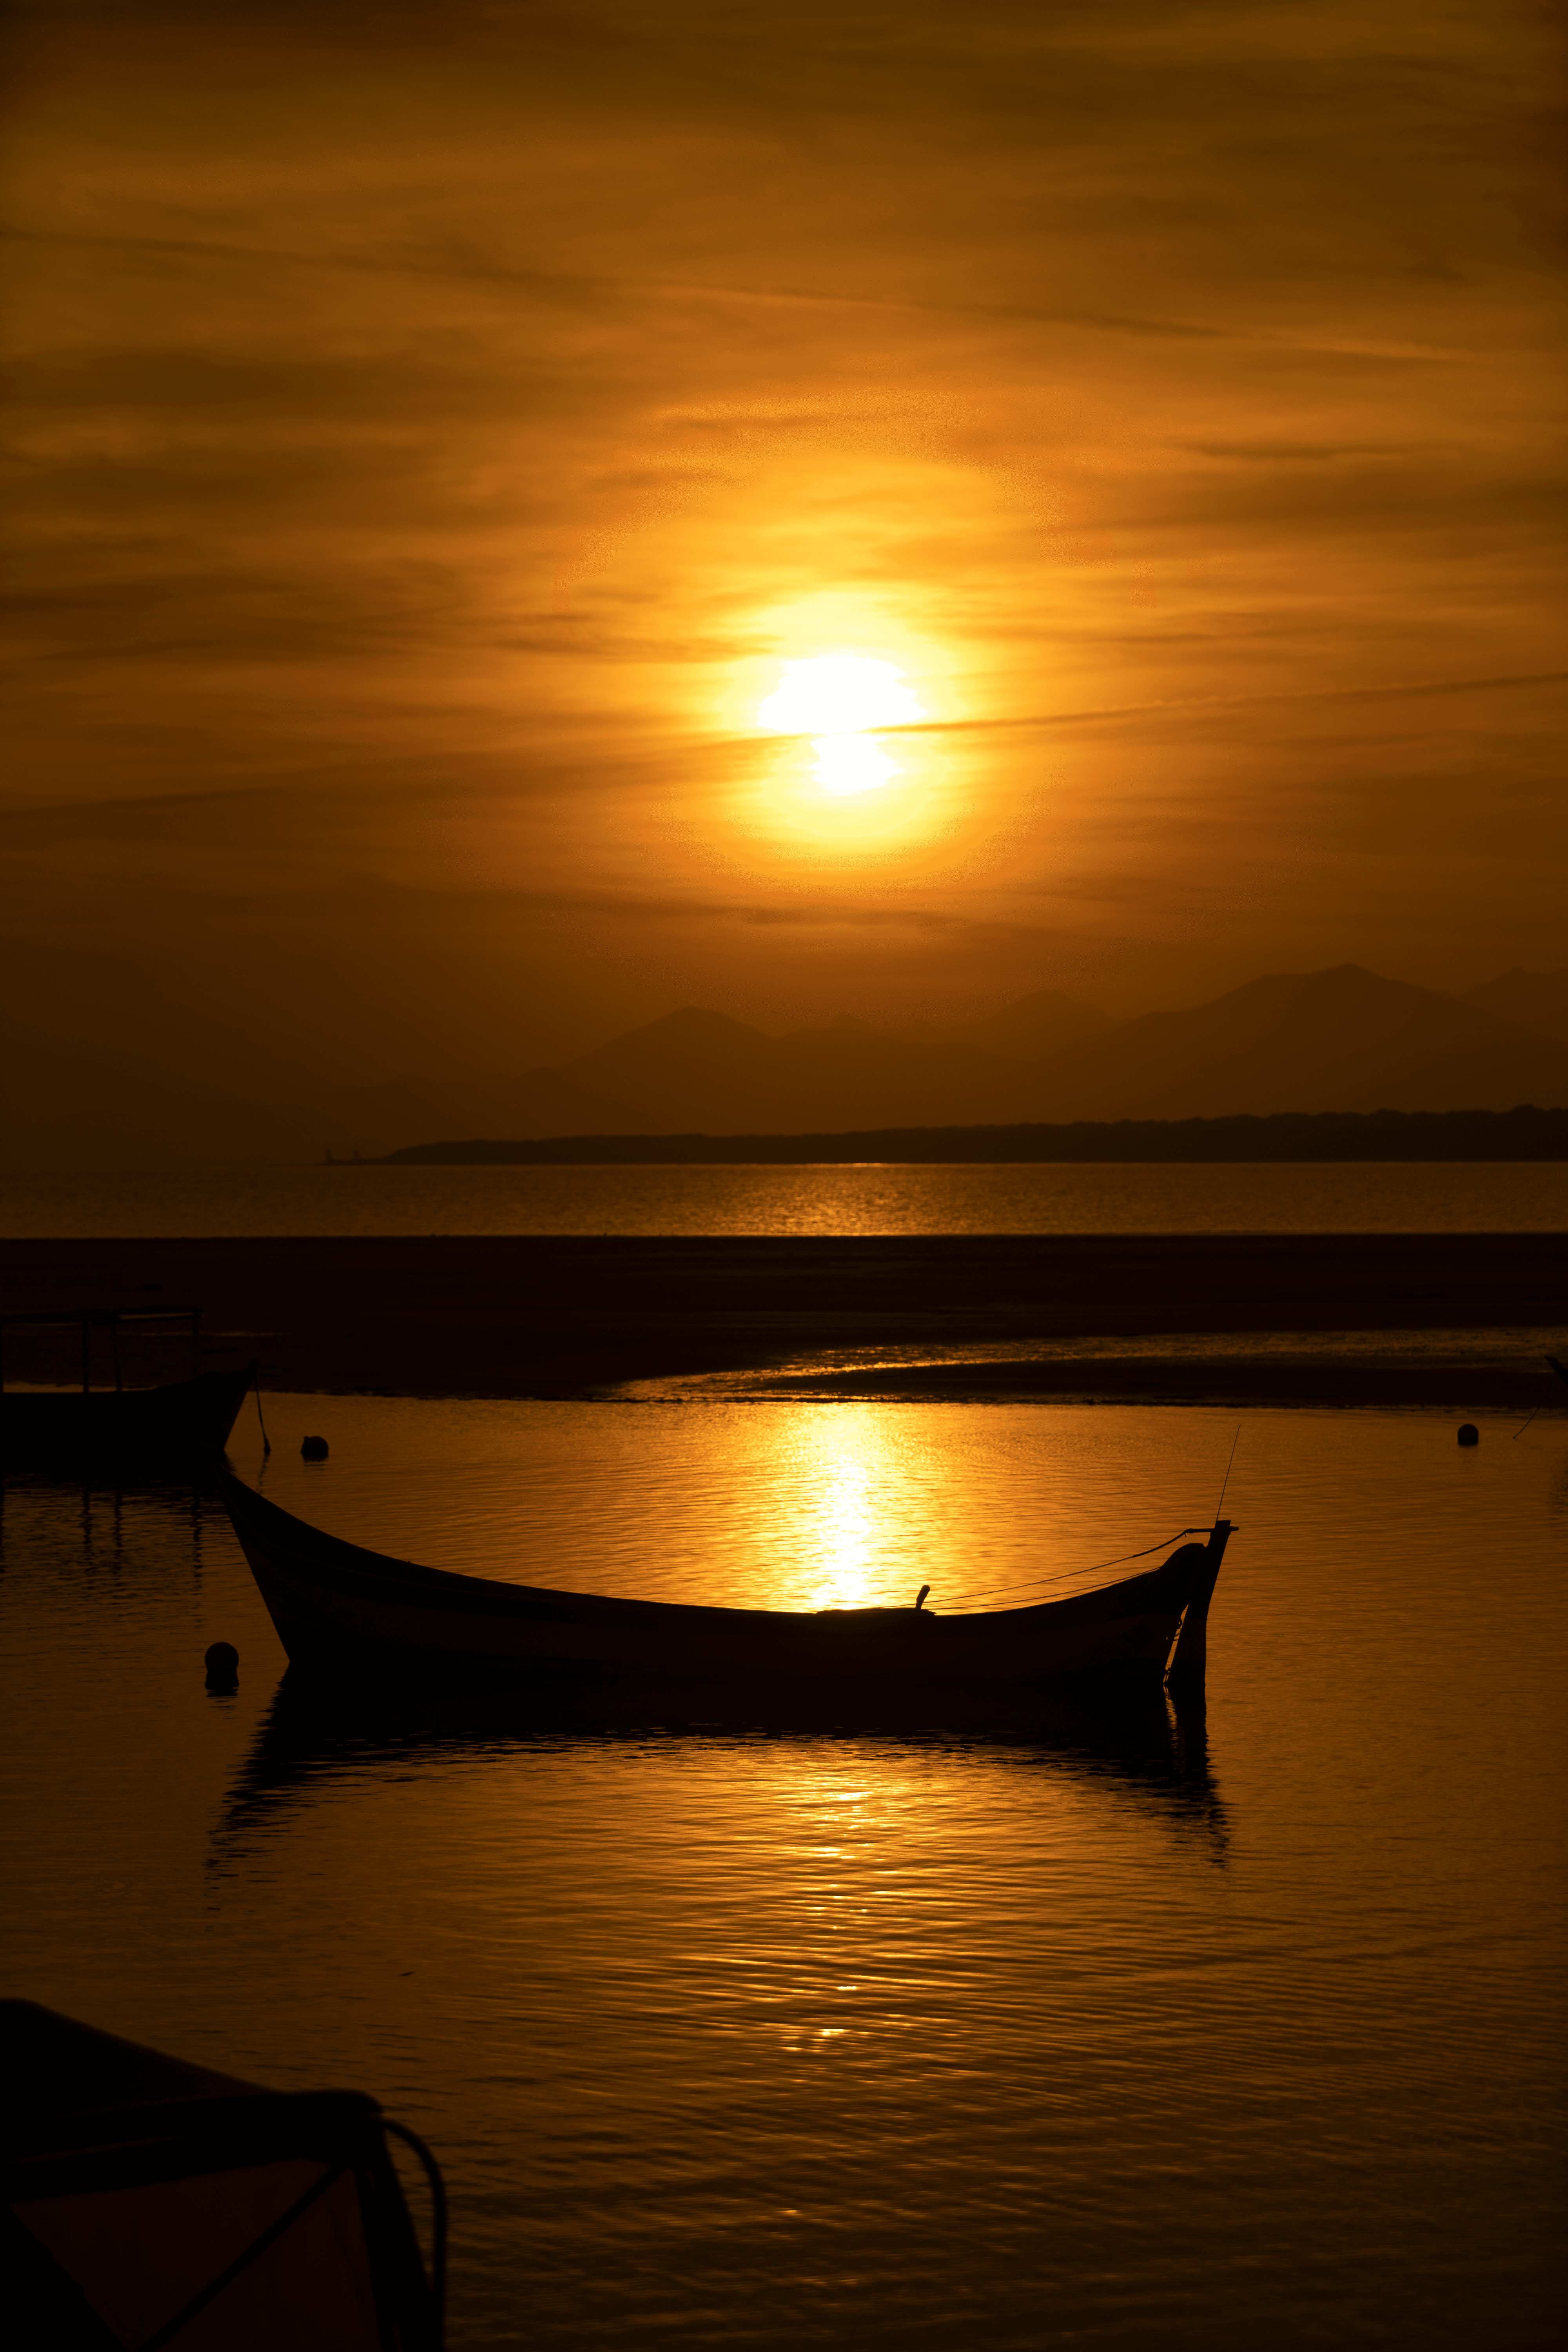 Golden boat